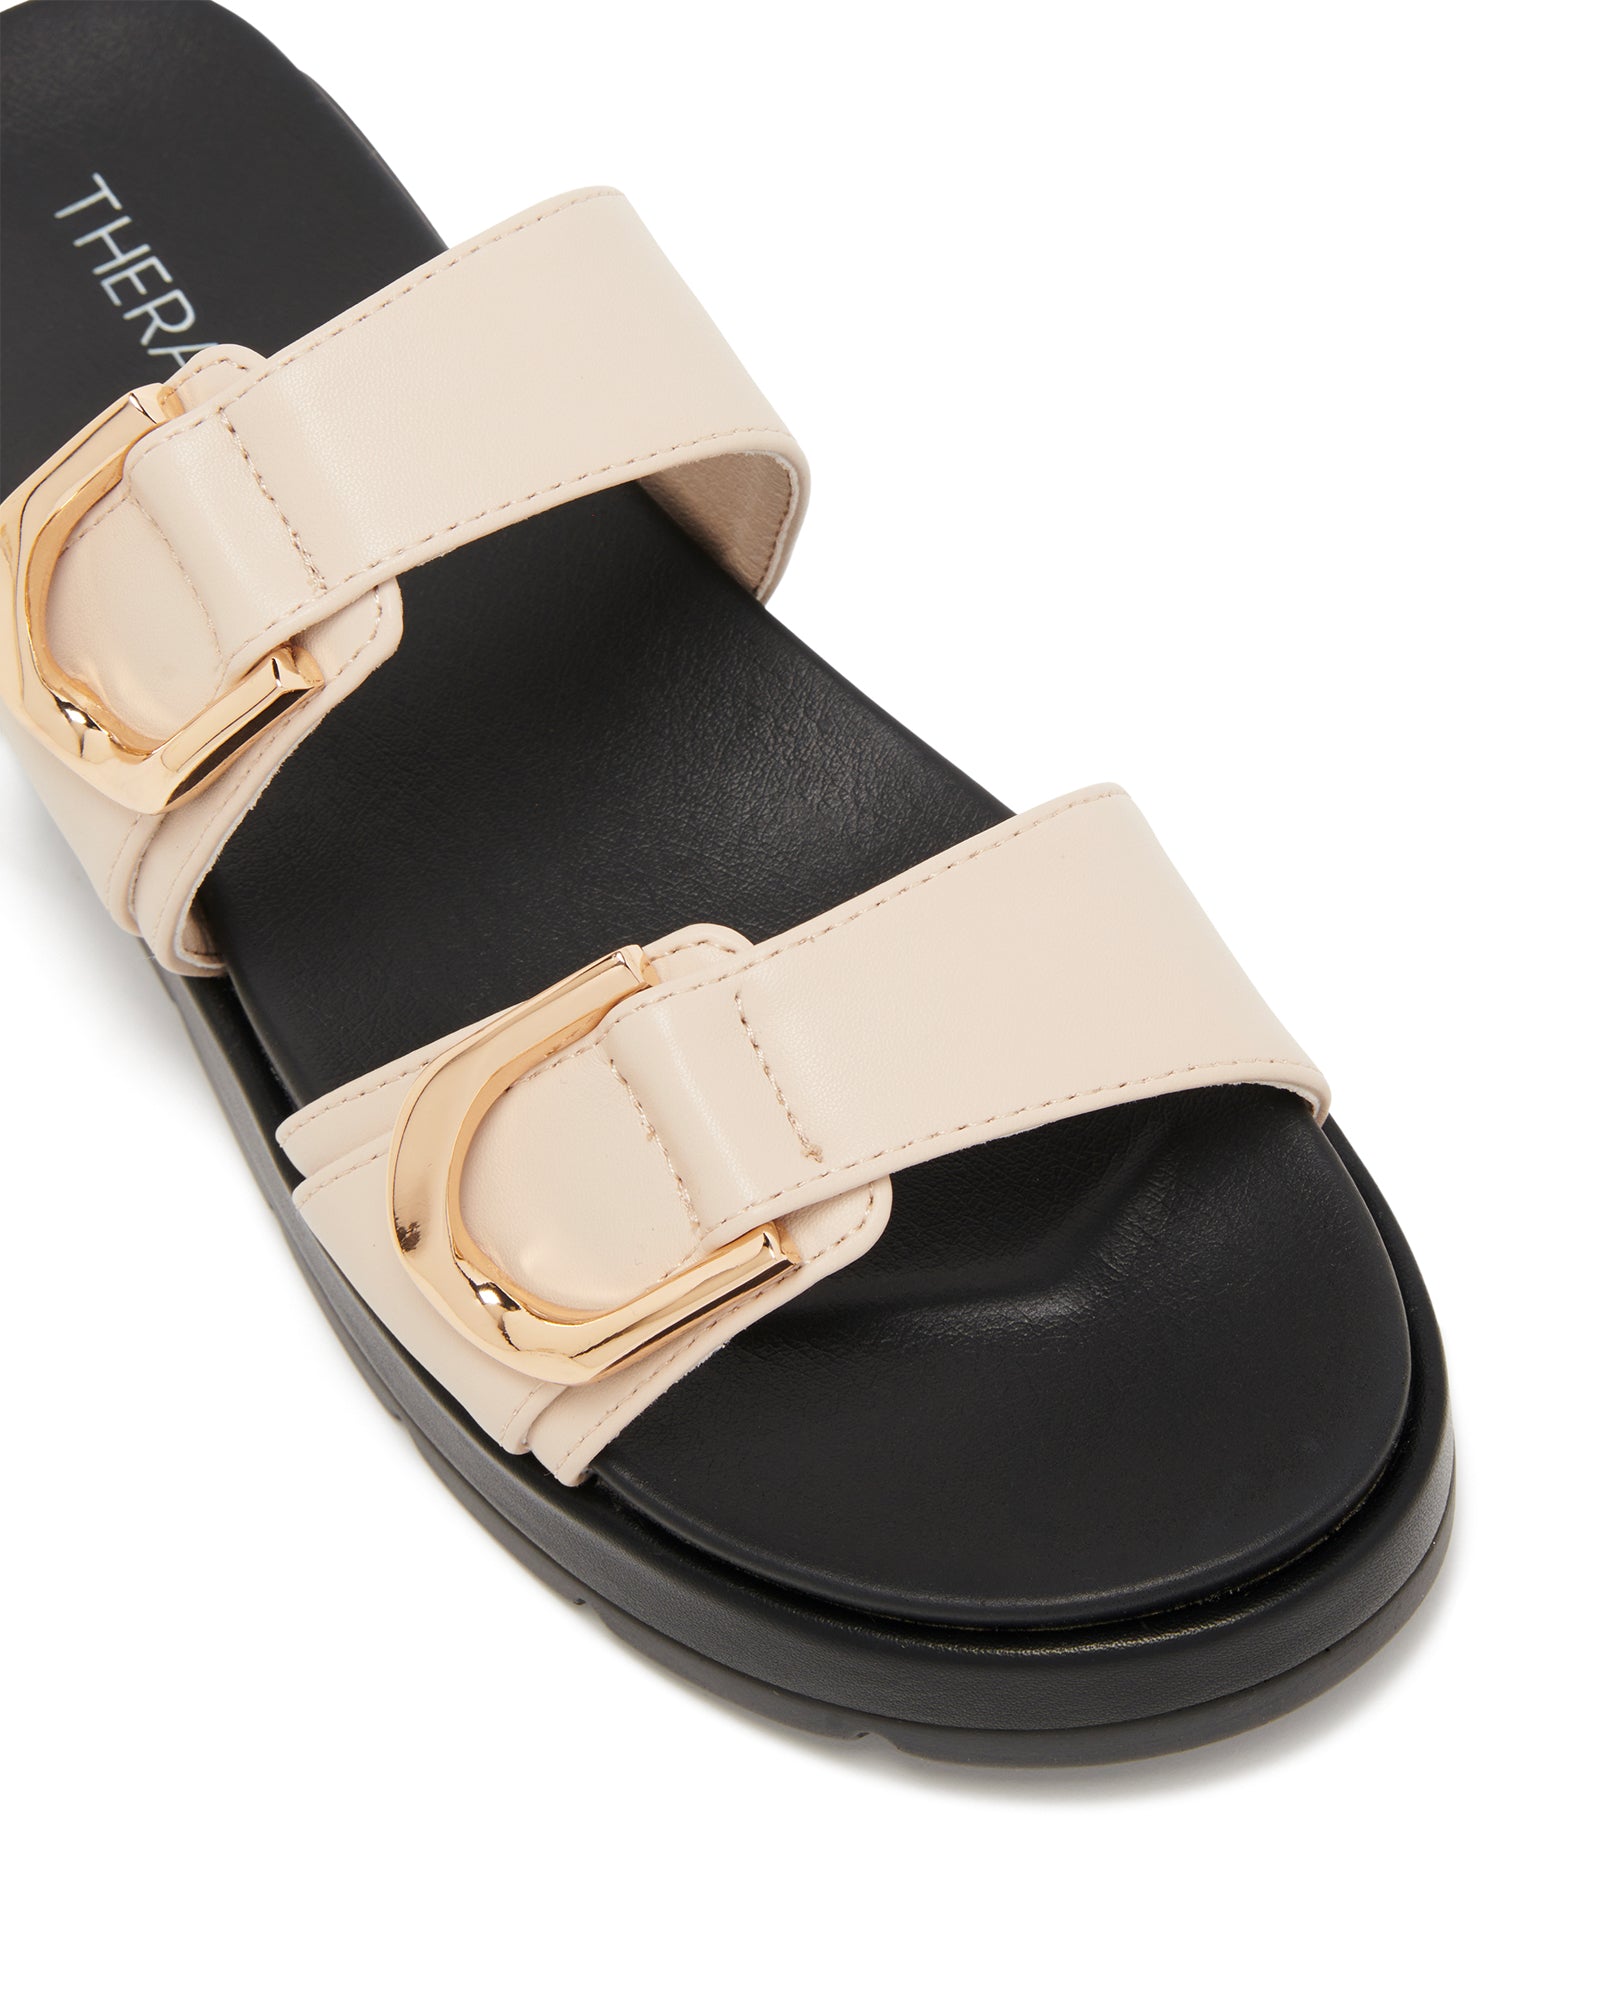 Therapy Shoes Link Bone Smooth | Women's Sandals | Slides | Platform